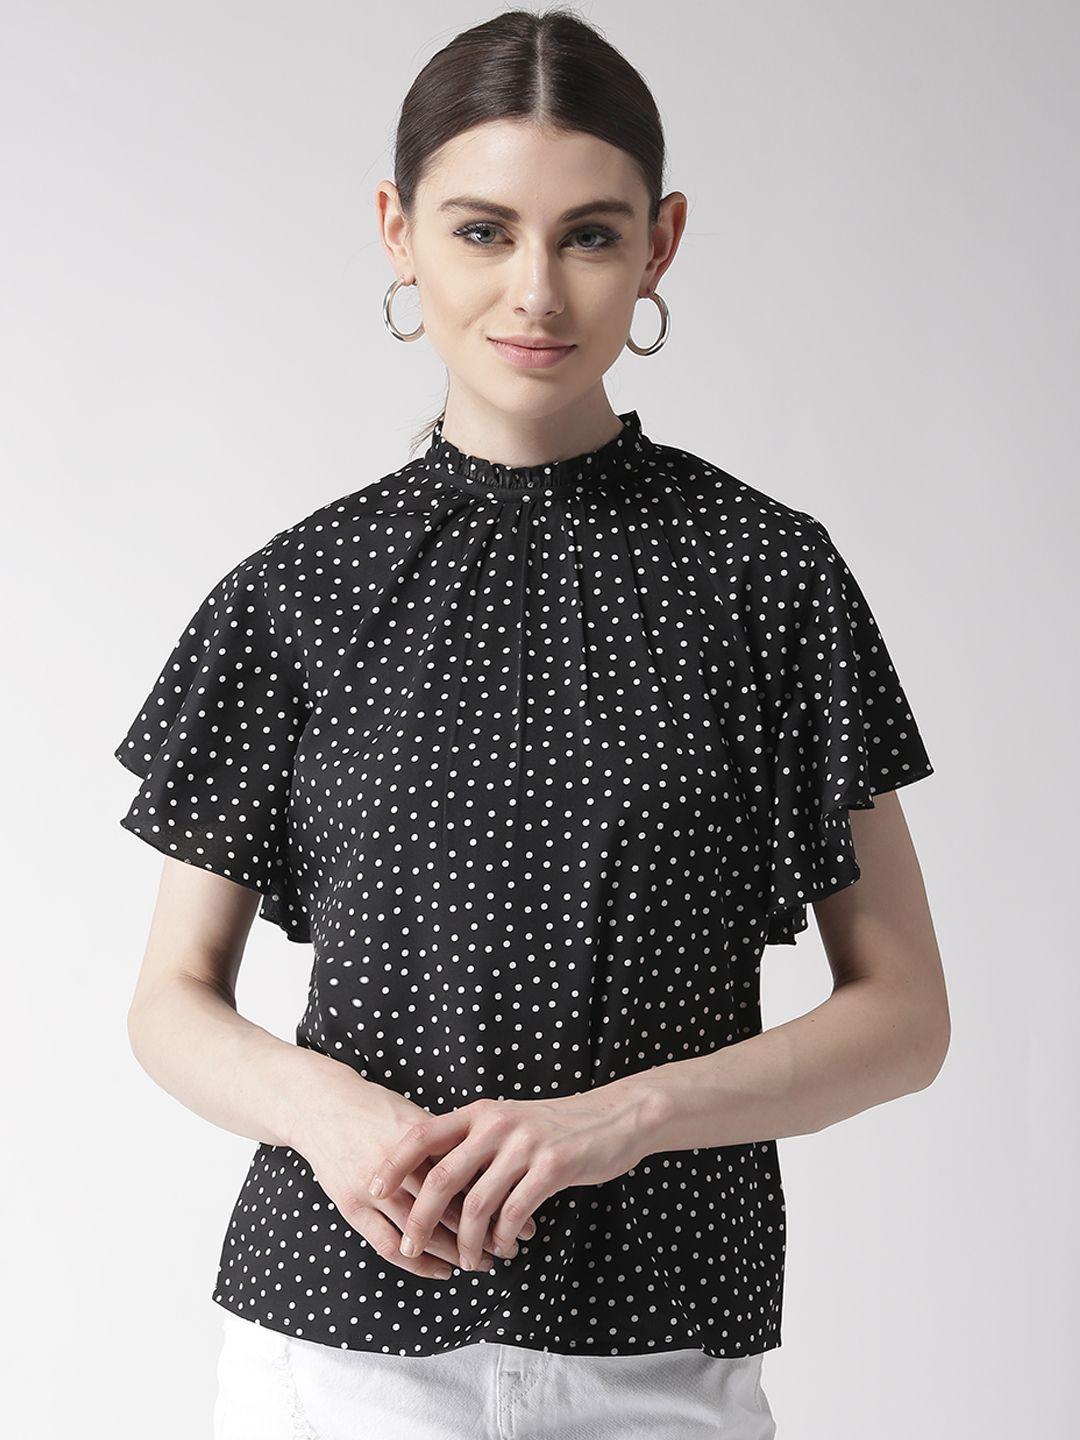 style-quotient-women-black-&-white-polka-dot-print-top